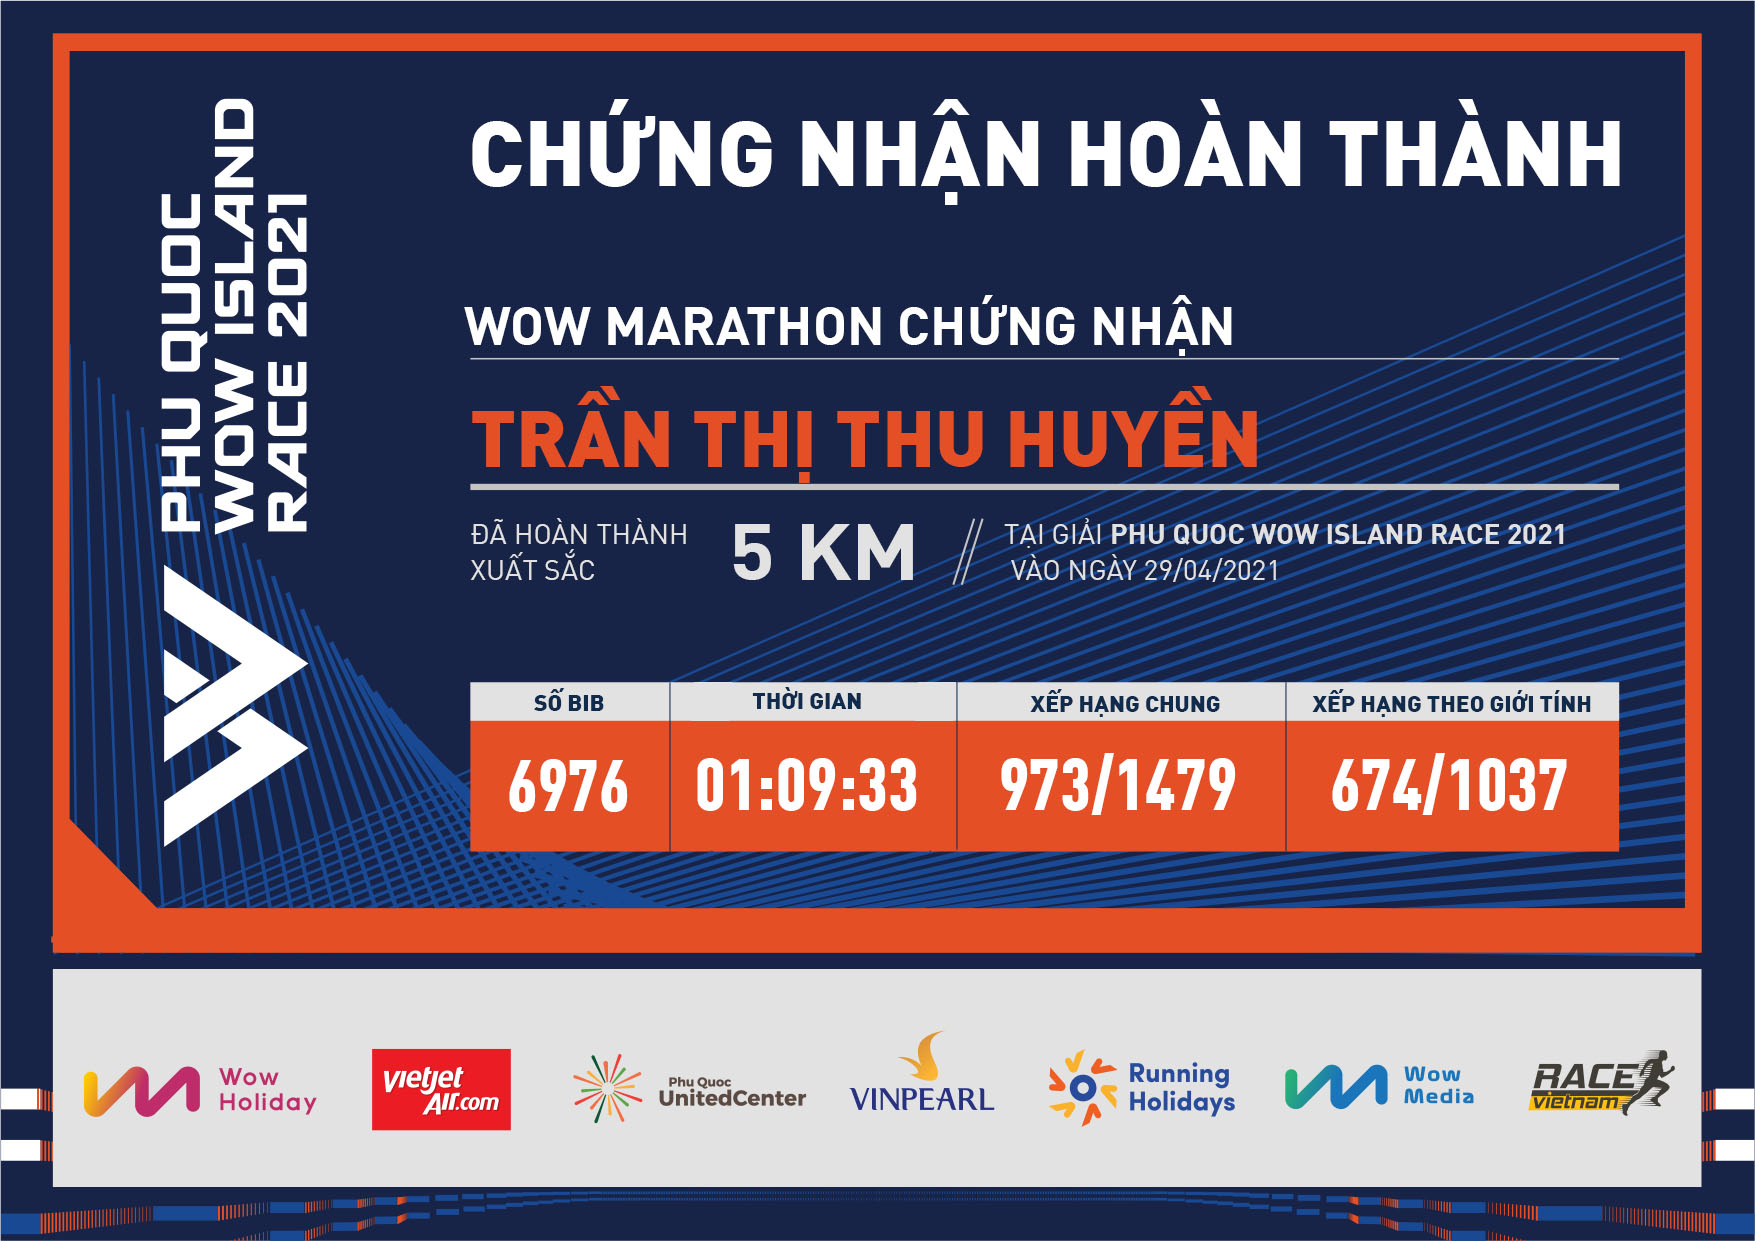 6976 - Trần Thị Thu Huyền